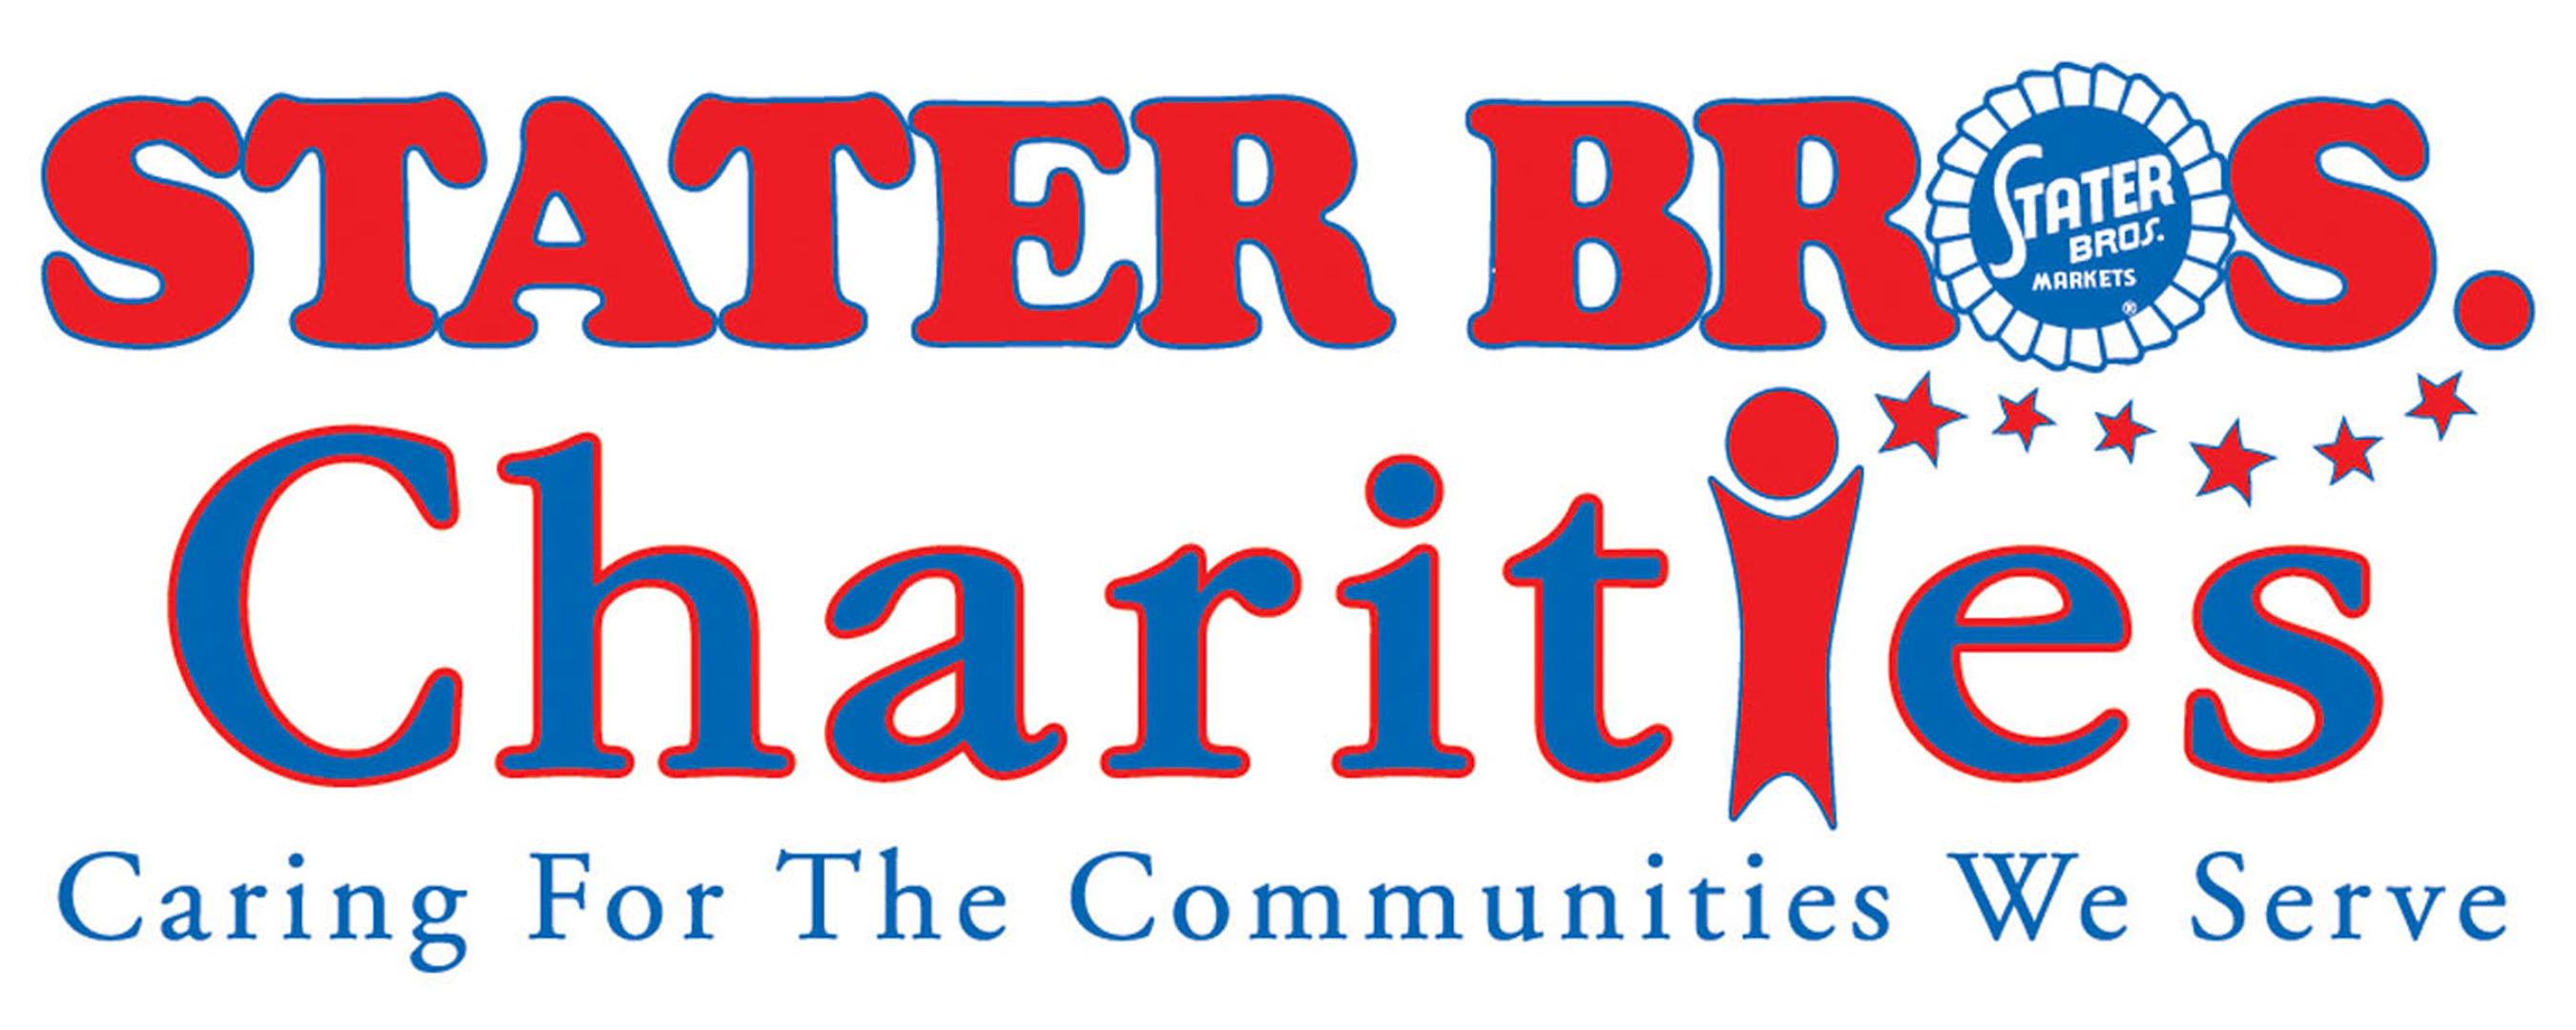 Stater Bros. Charities Logo. (PRNewsFoto/Stater Bros. Charities) (PRNewsFoto/STATER BROS_ CHARITIES)